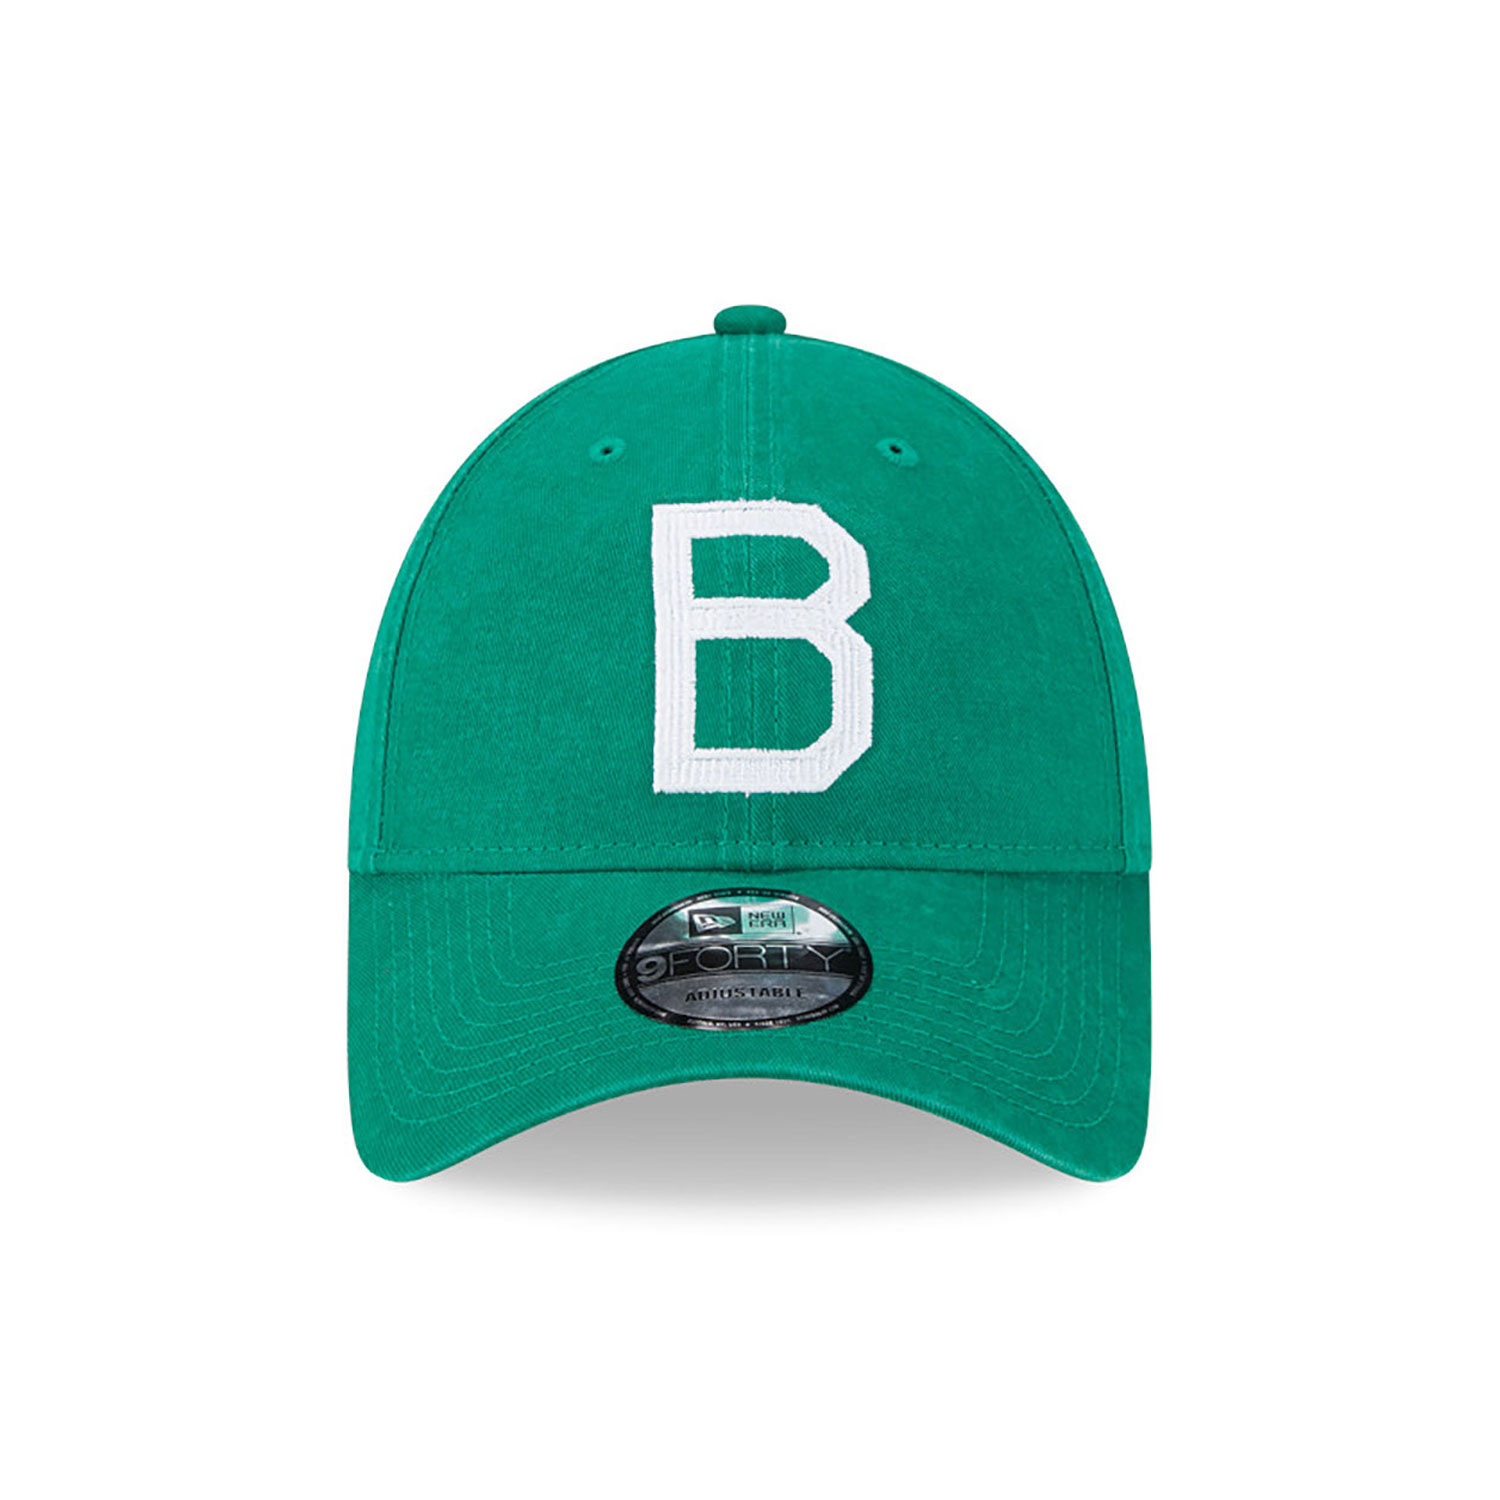 Brooklyn Dodgers Cooperstown Green 9FORTY Adjustable Cap